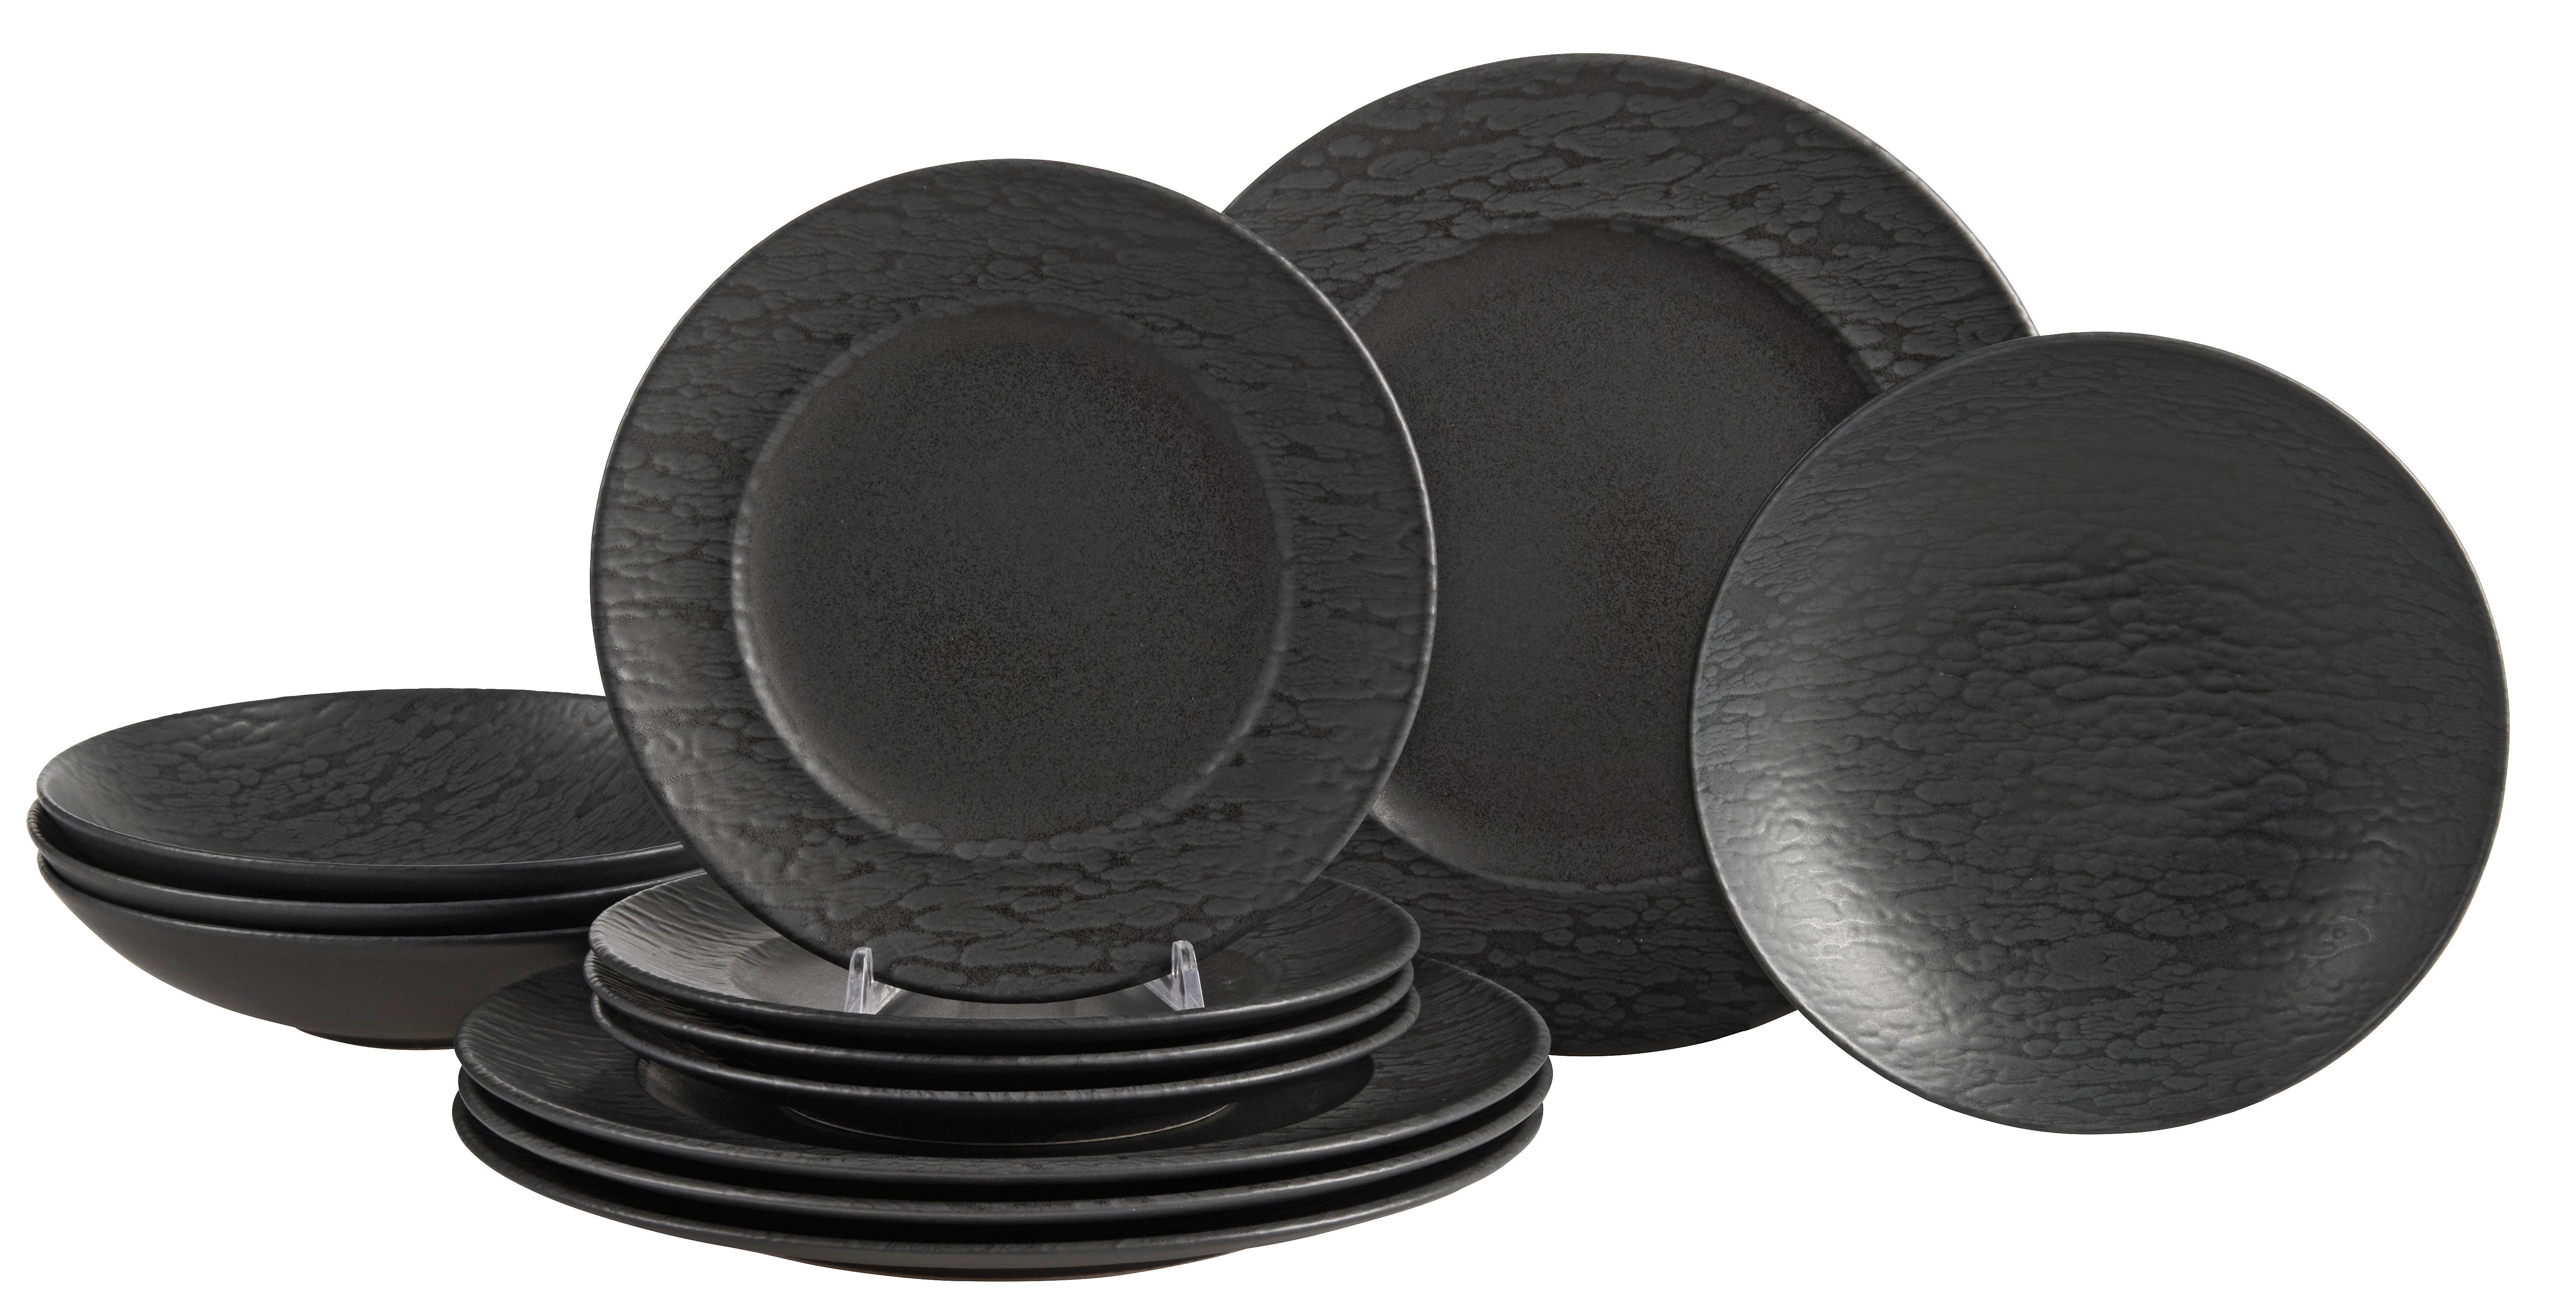 Servis Za Jelo Black Vintage - crna, Modern, keramika (1/1/1cm) - Premium Living